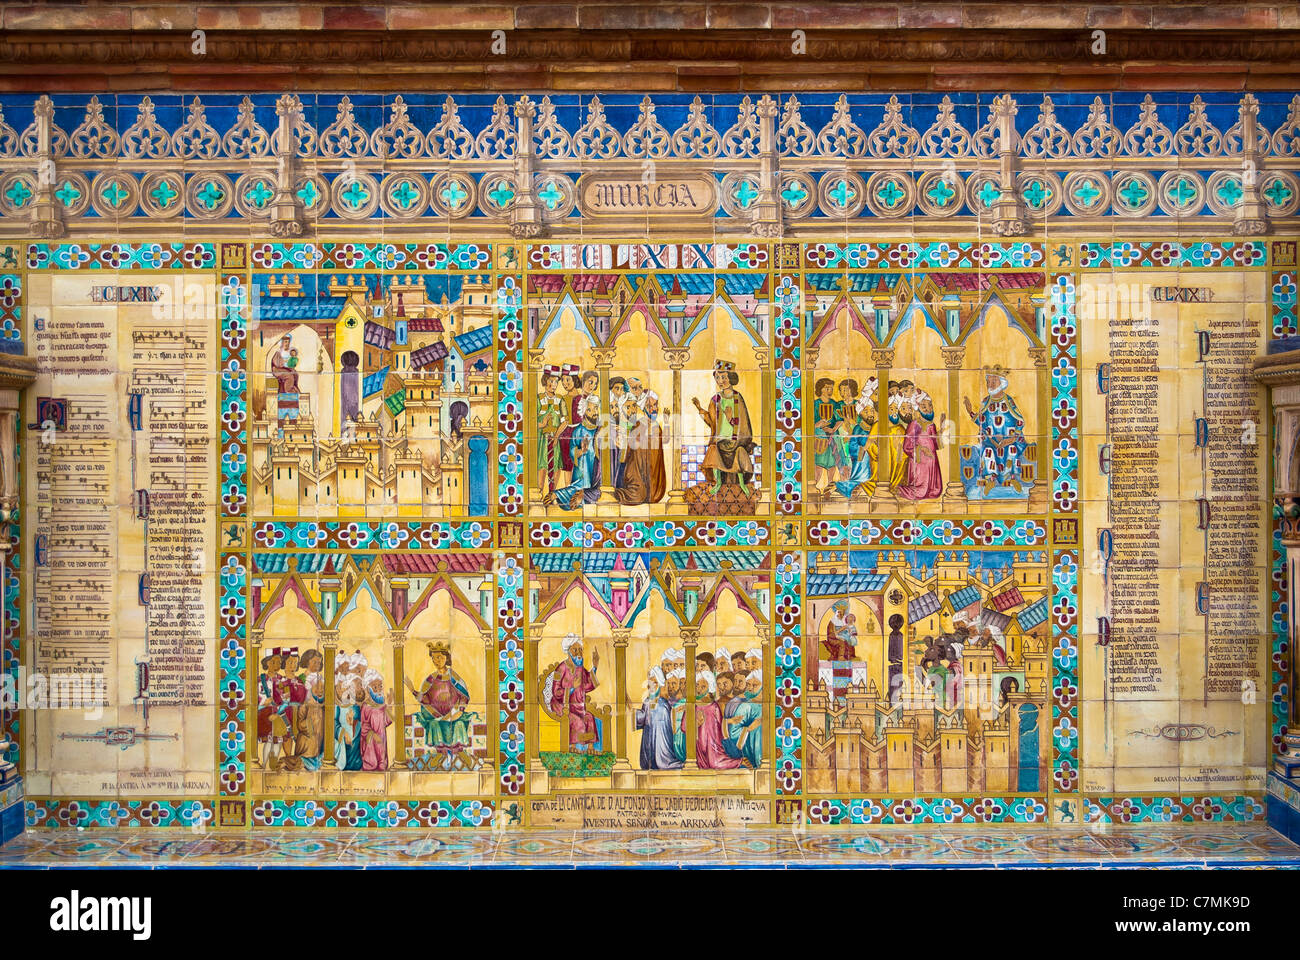 Berühmte Keramik Dekoration in Platz von Spanien, Sevilla Spanien. Murcia-Thema. Stockfoto